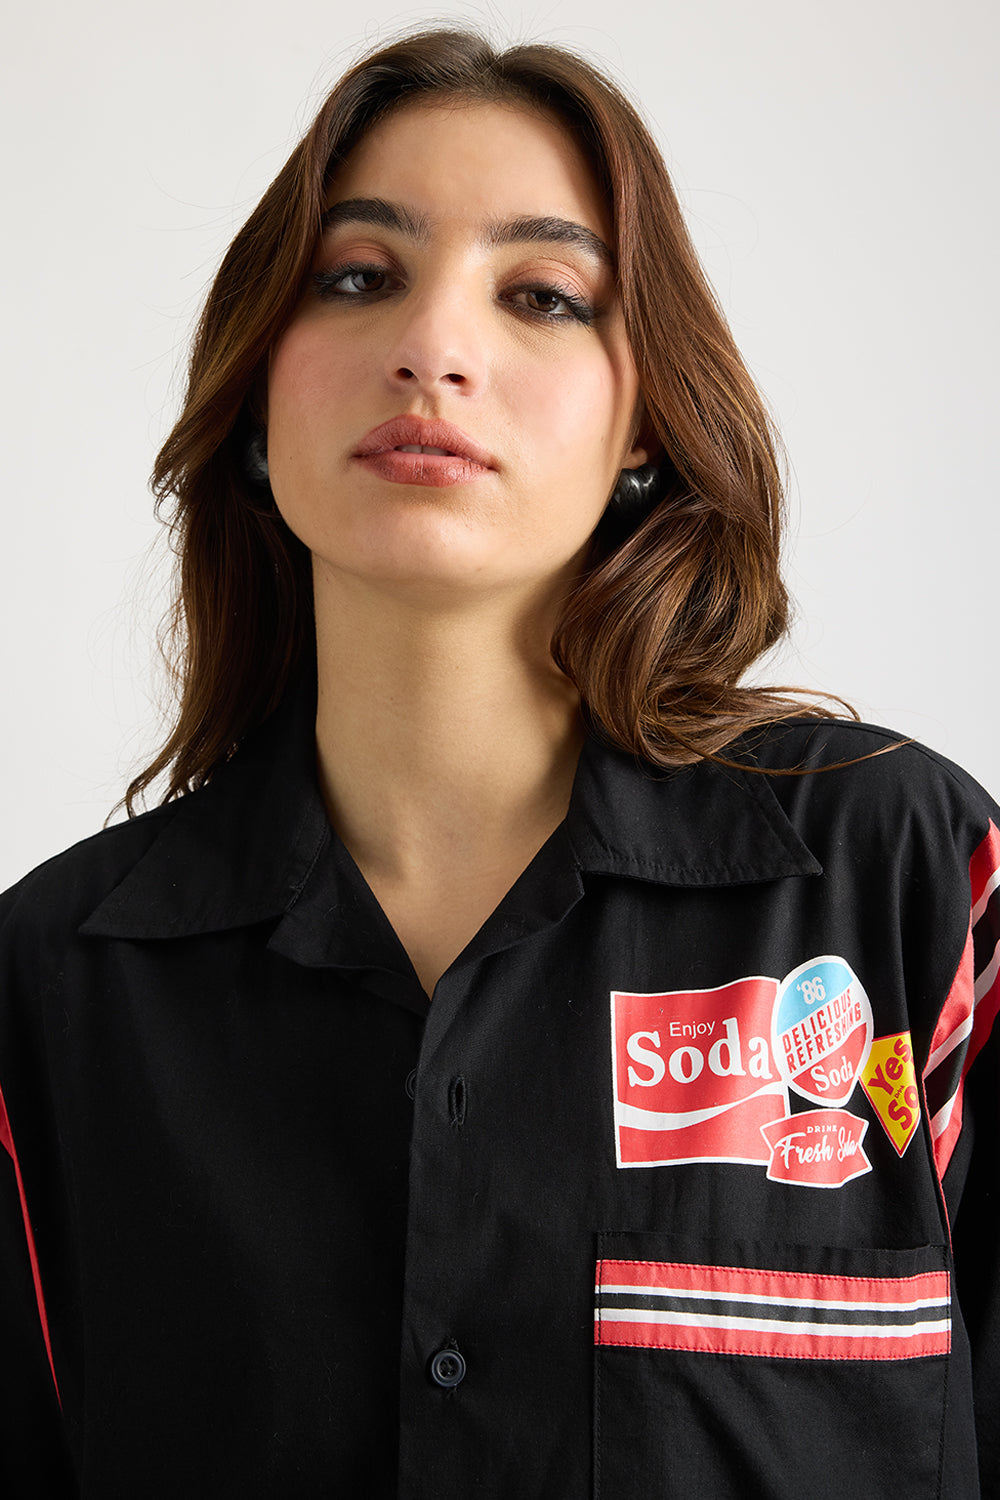 Cotton Poplin Women's Garage Shirt - Black with Sleeve Stripes